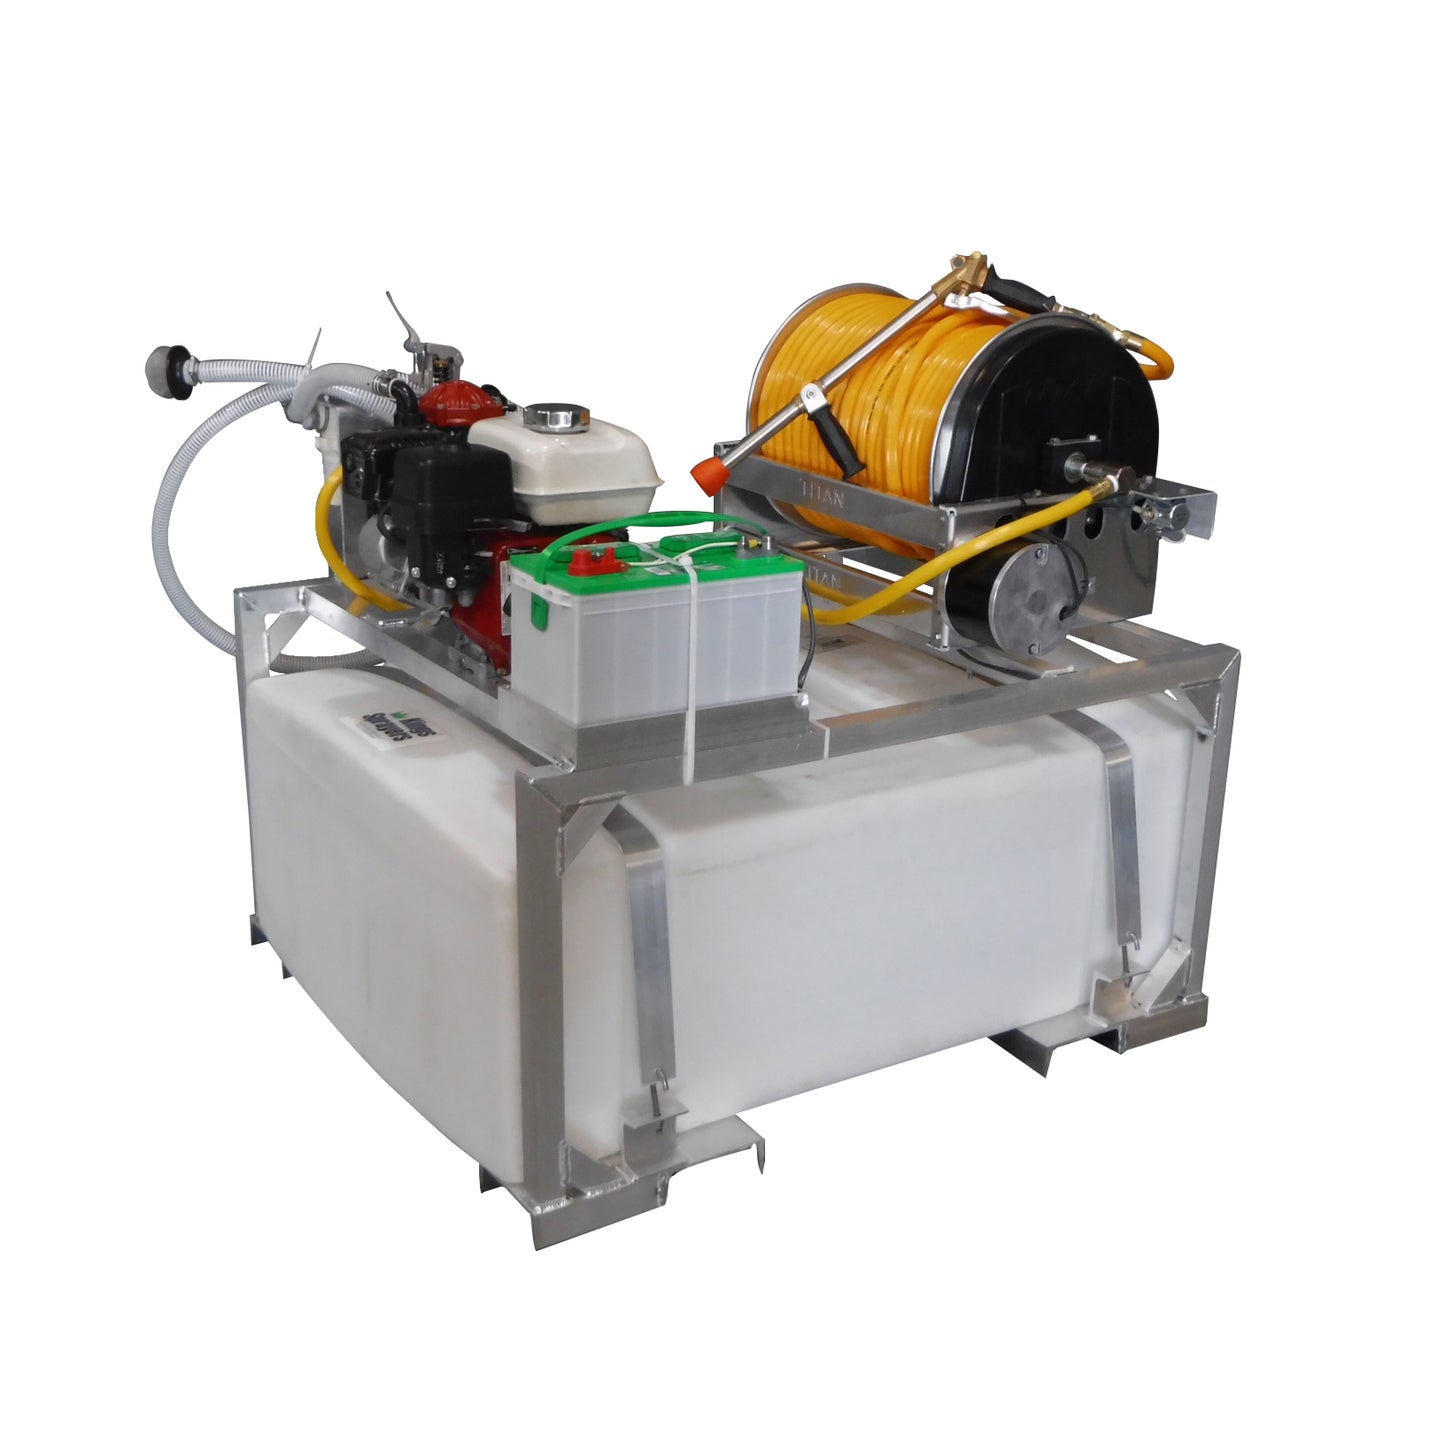 Kings Sprayers 100 Gallon UTV Skid Sprayer with 10 gpm Diaphragm Pump & Electric Hose Reel w/ Battery Kit (Deep Cycle)